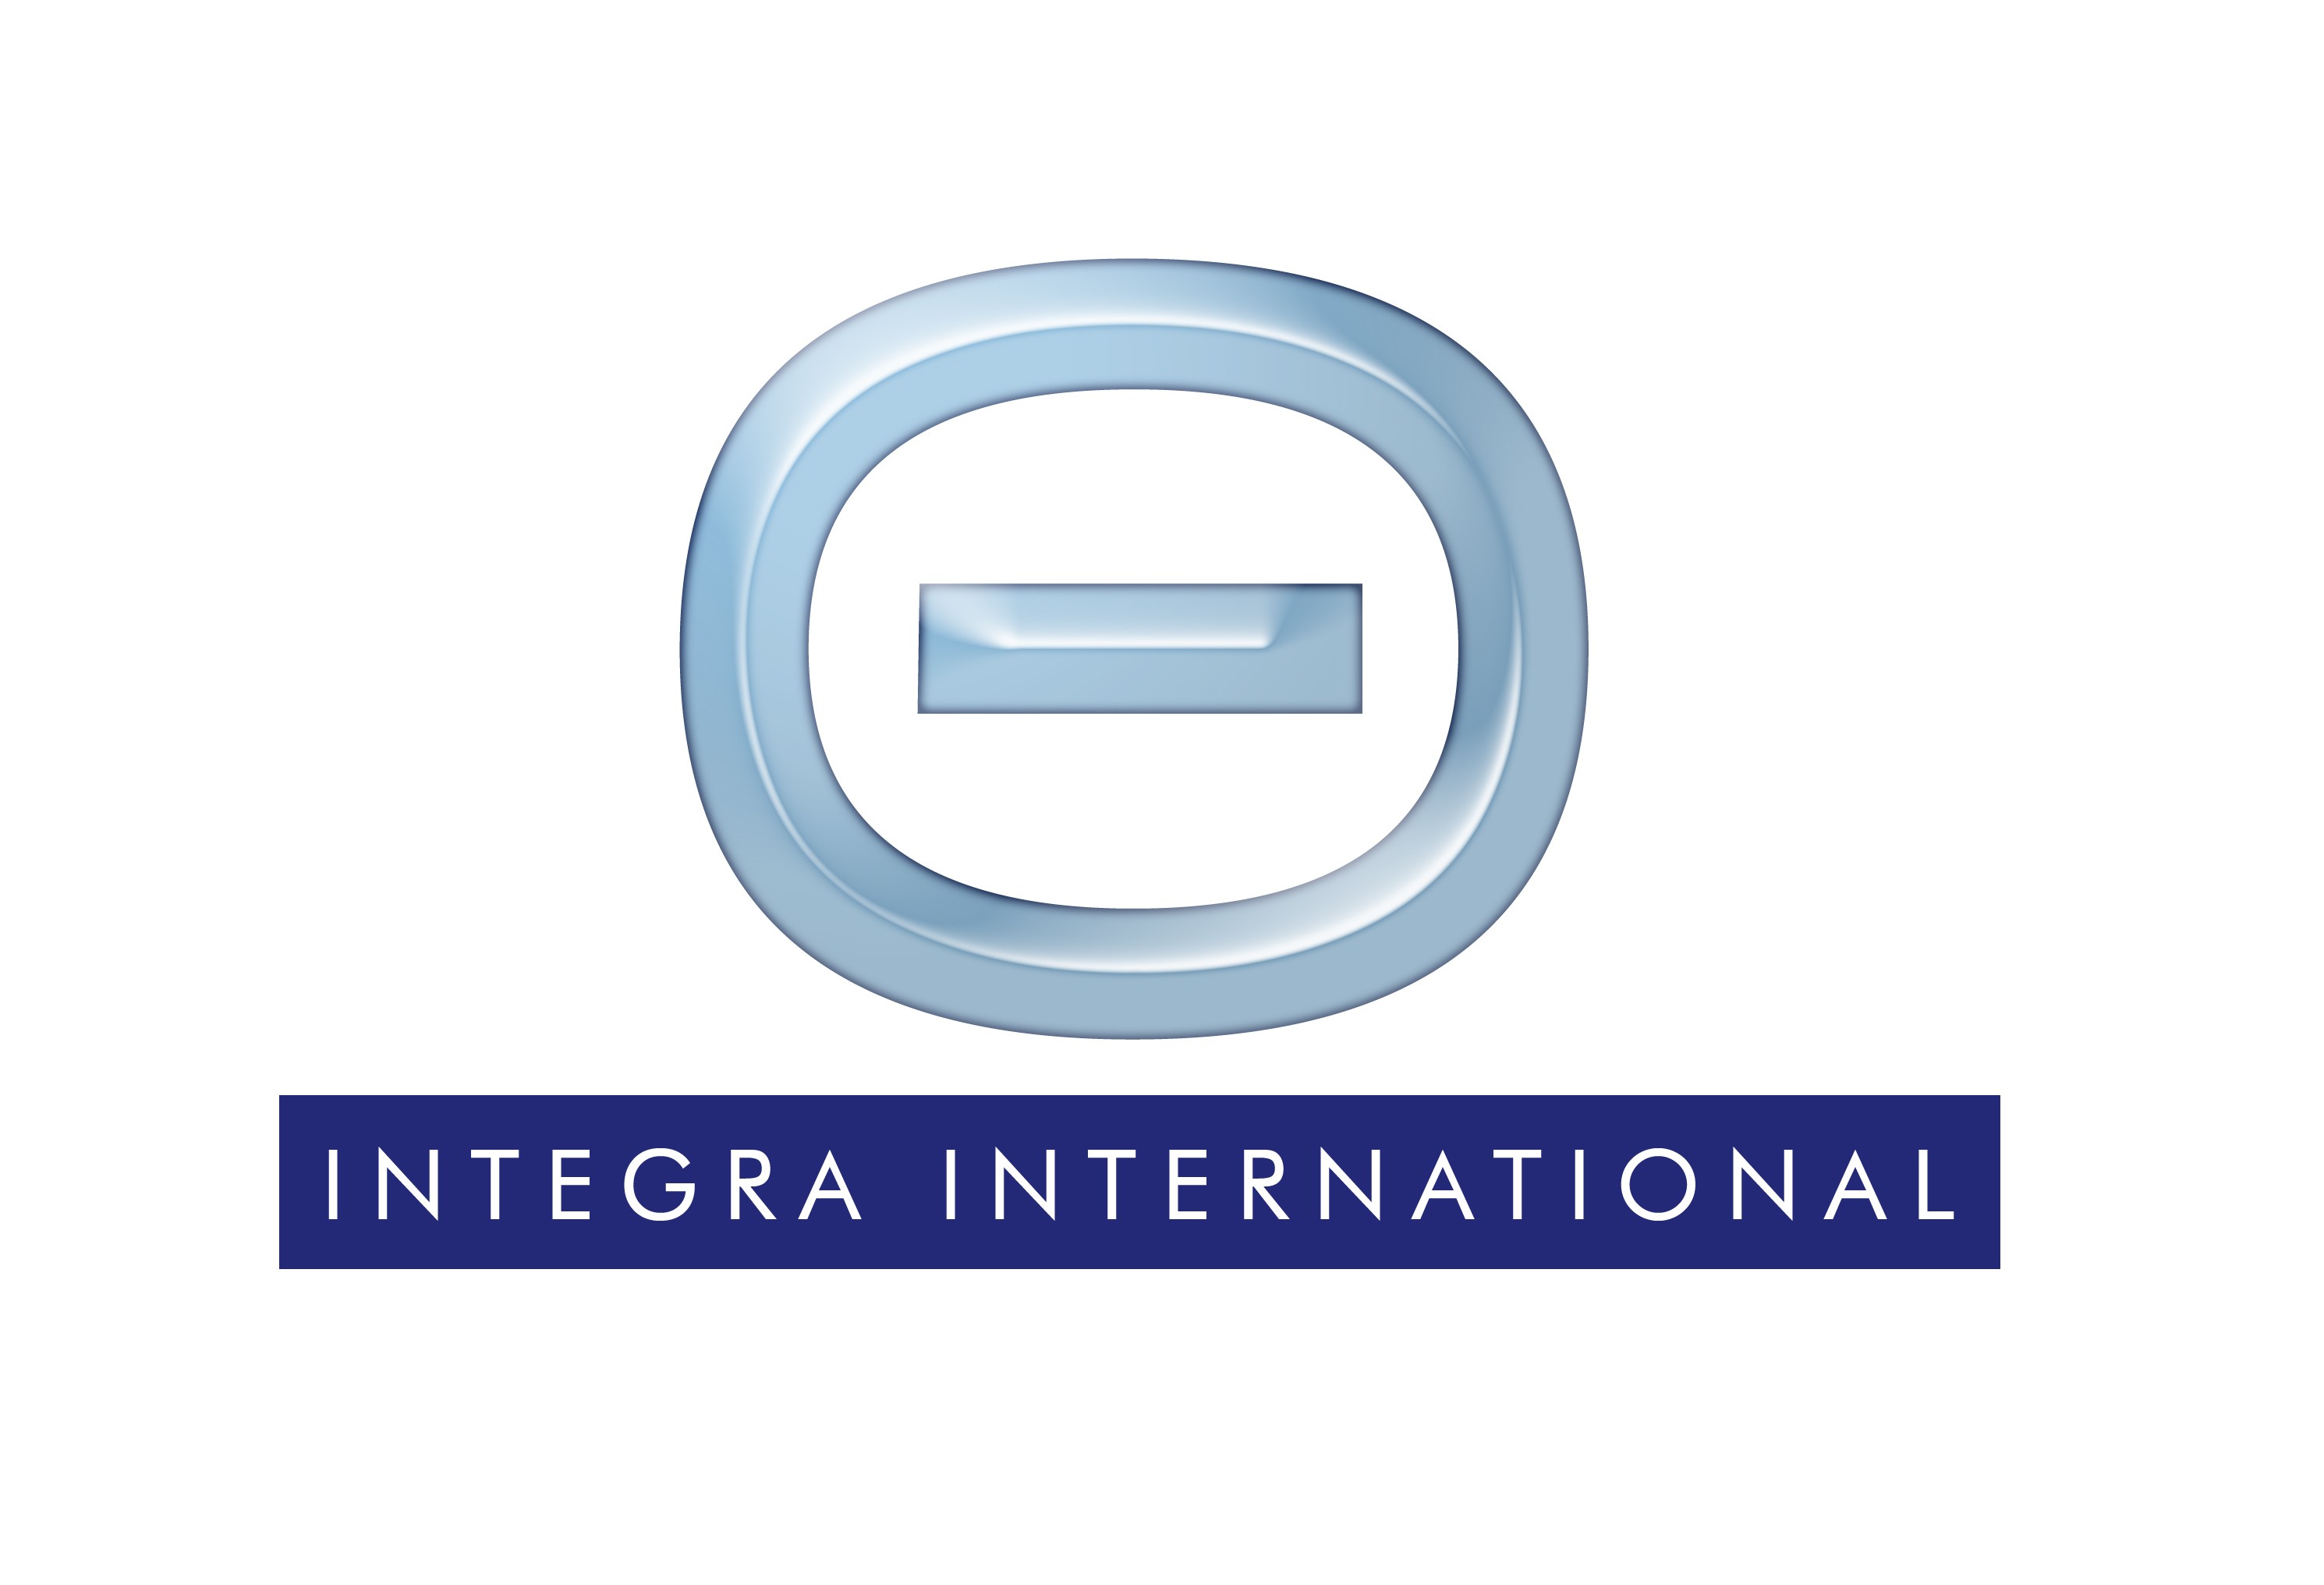 Integra International - Alta Gestion Logistica